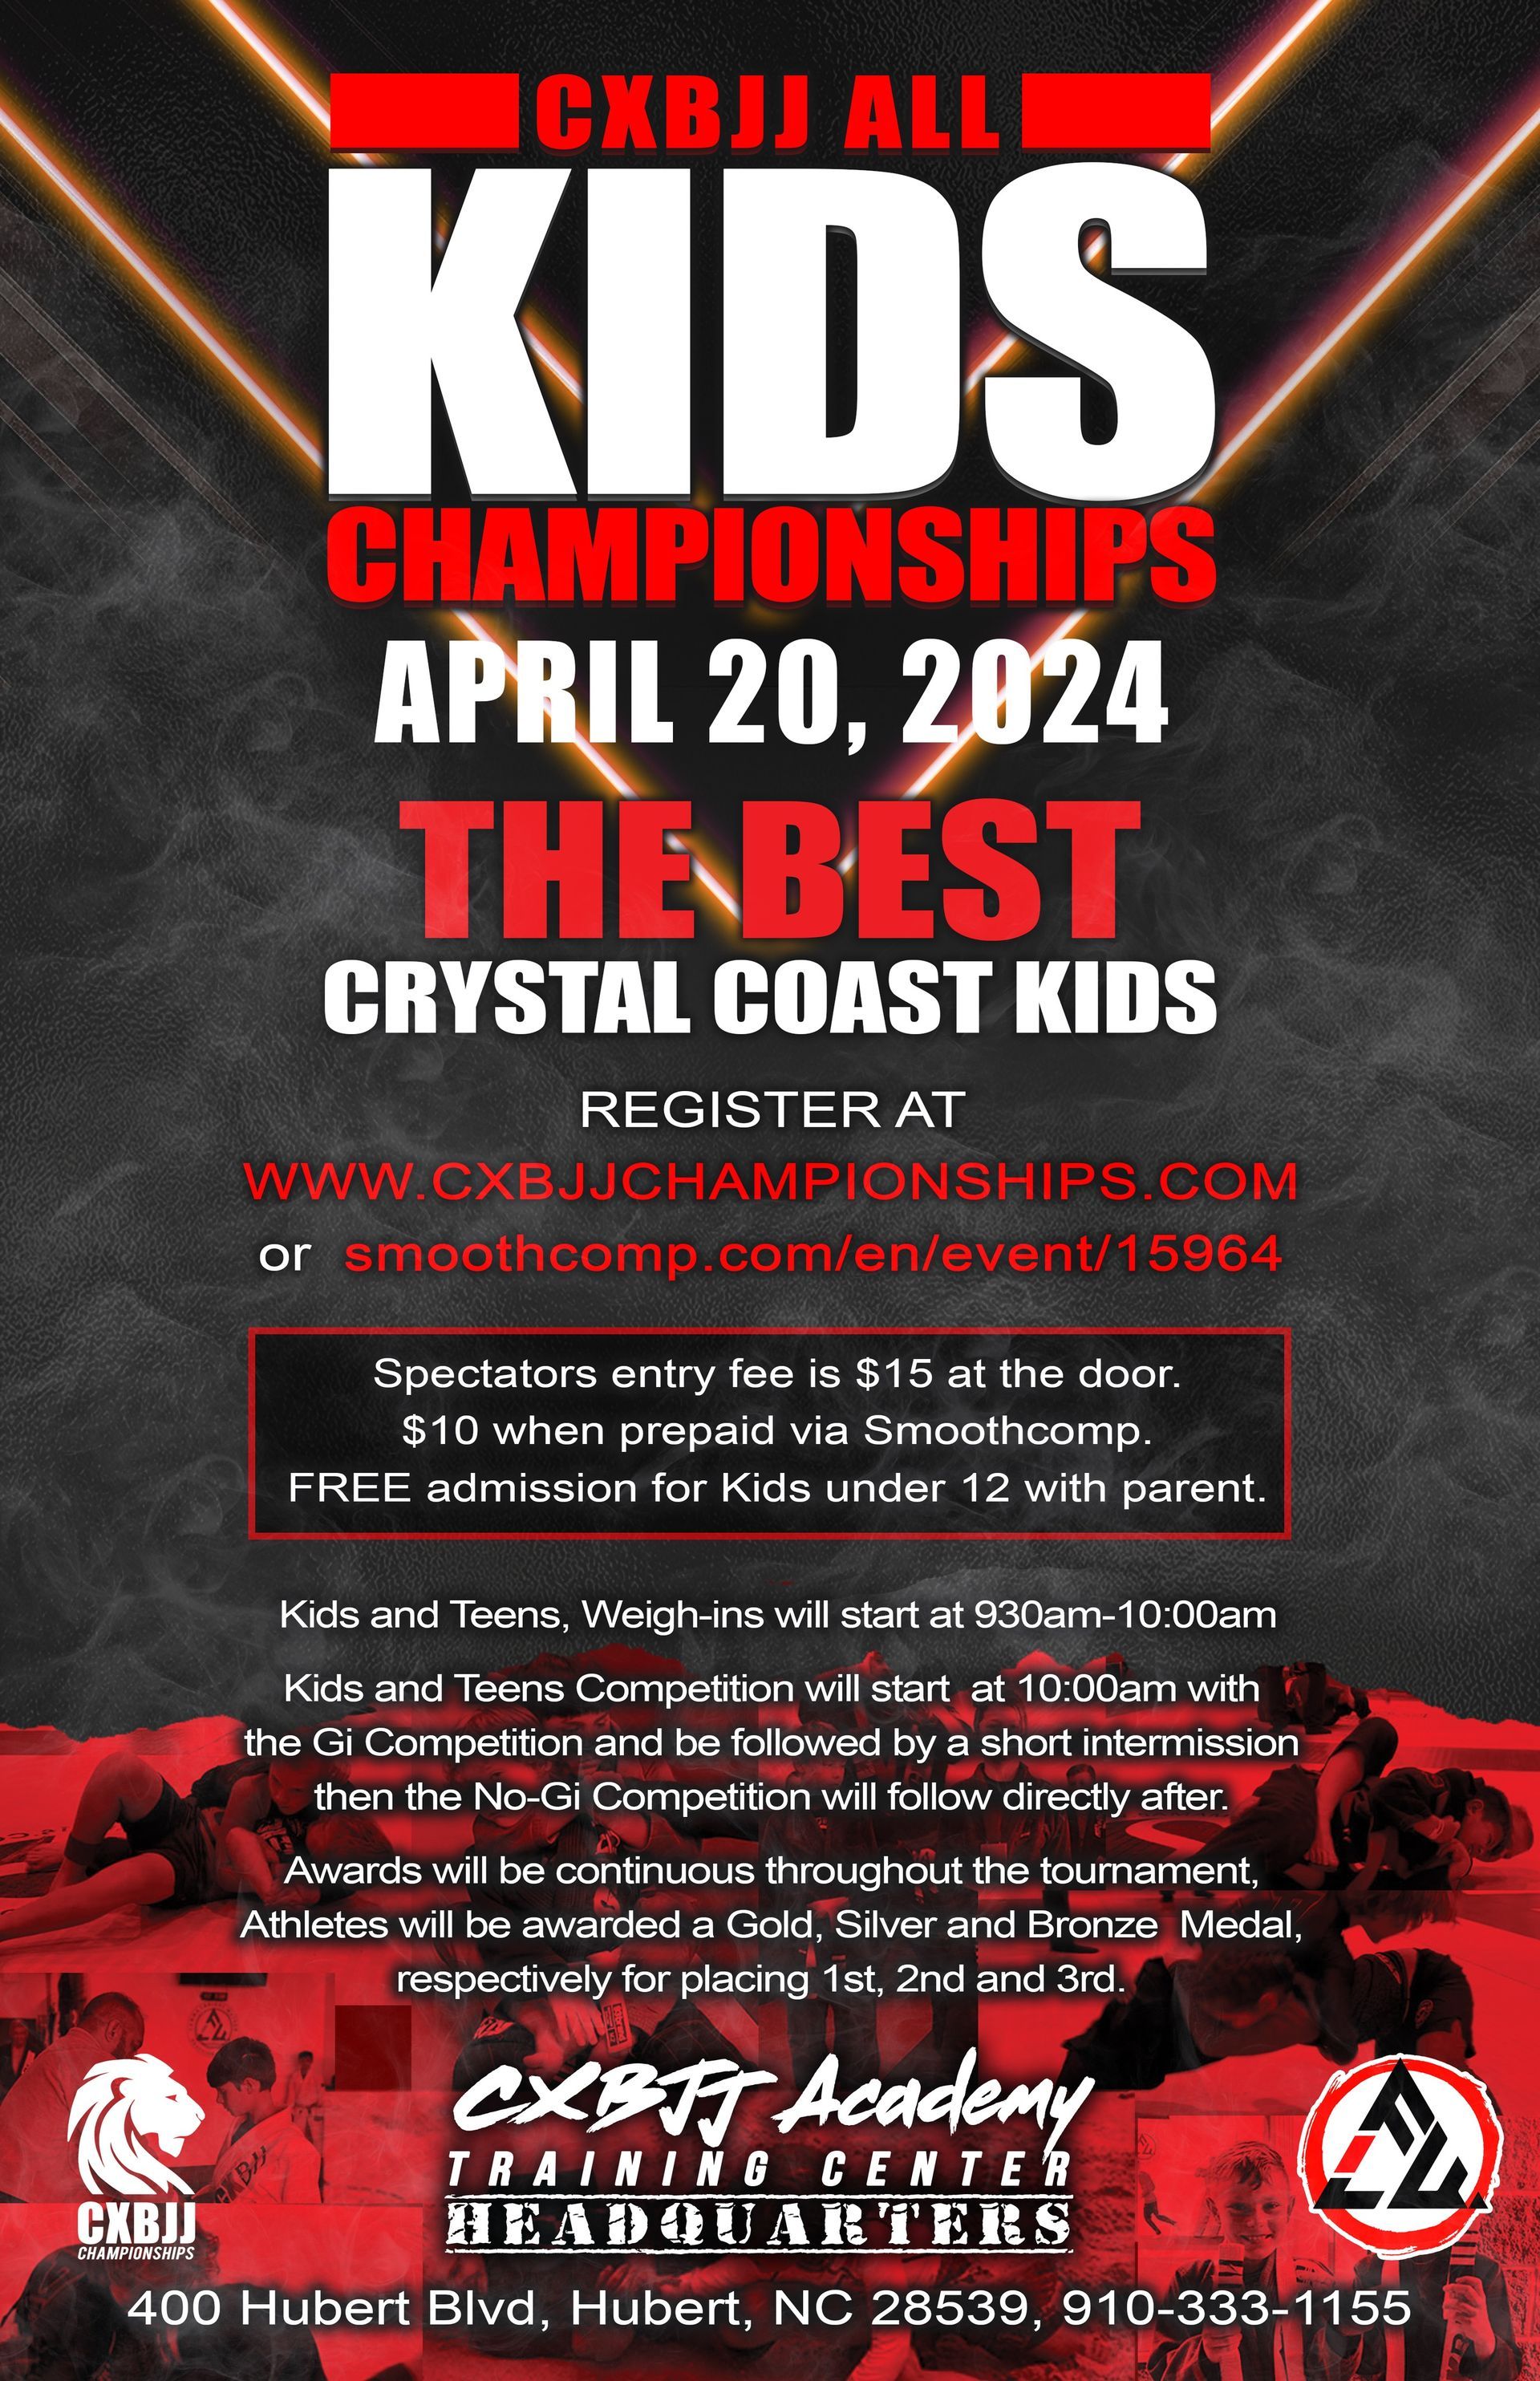 CXBJJ All Kids Championship